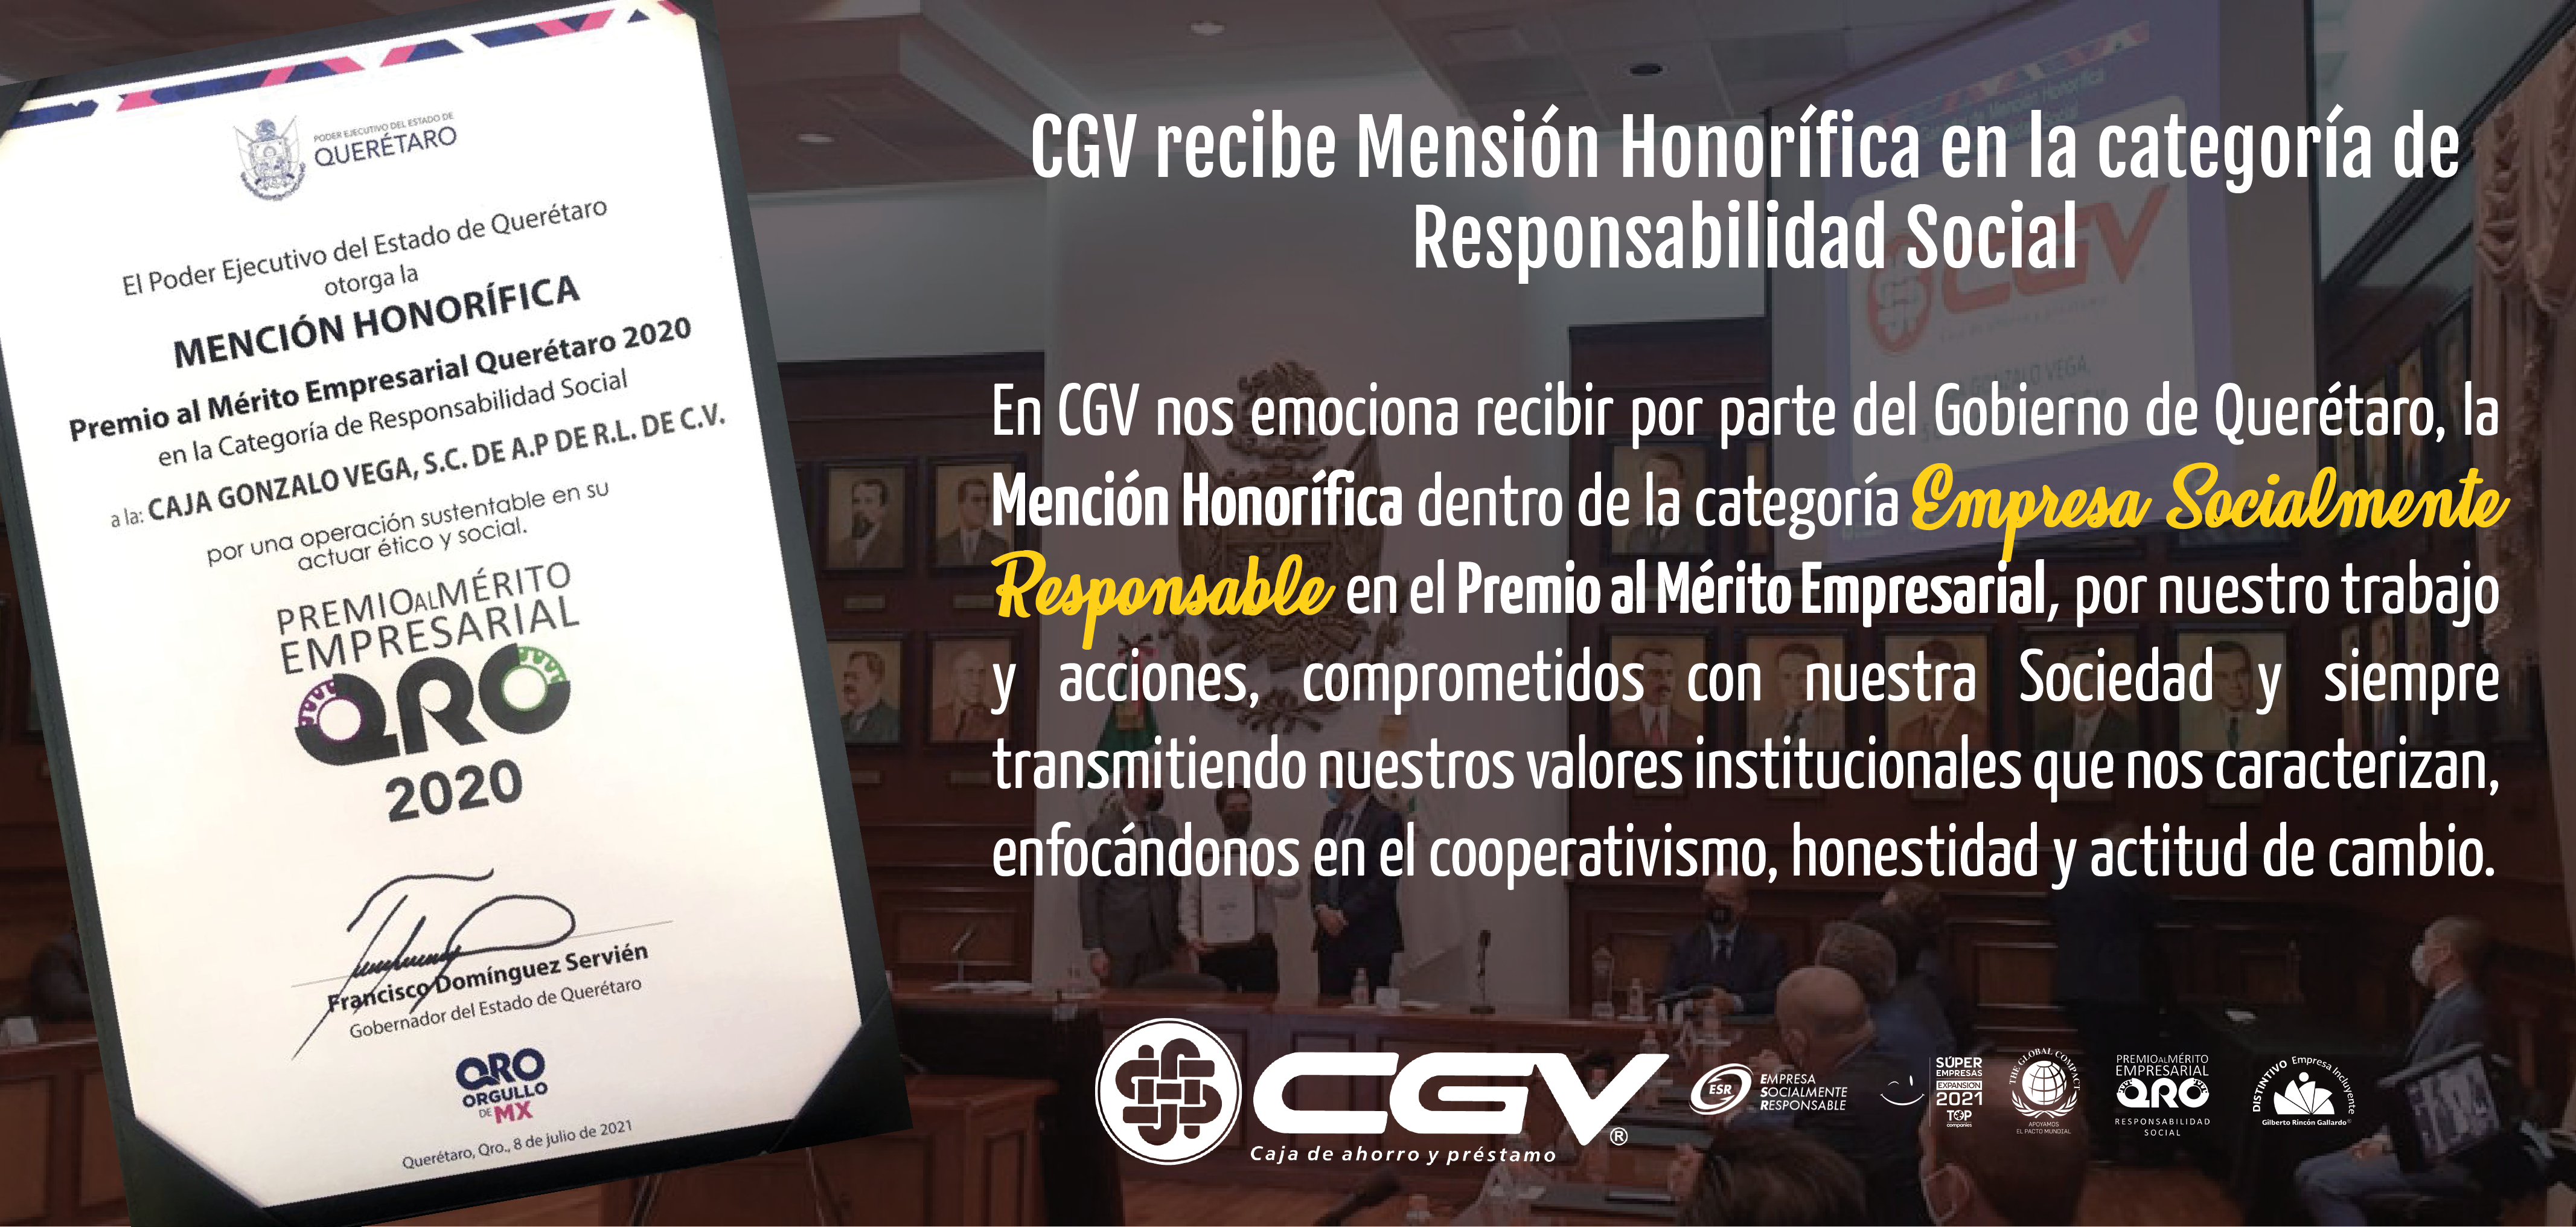 CGV Recibe Mención Honorífica